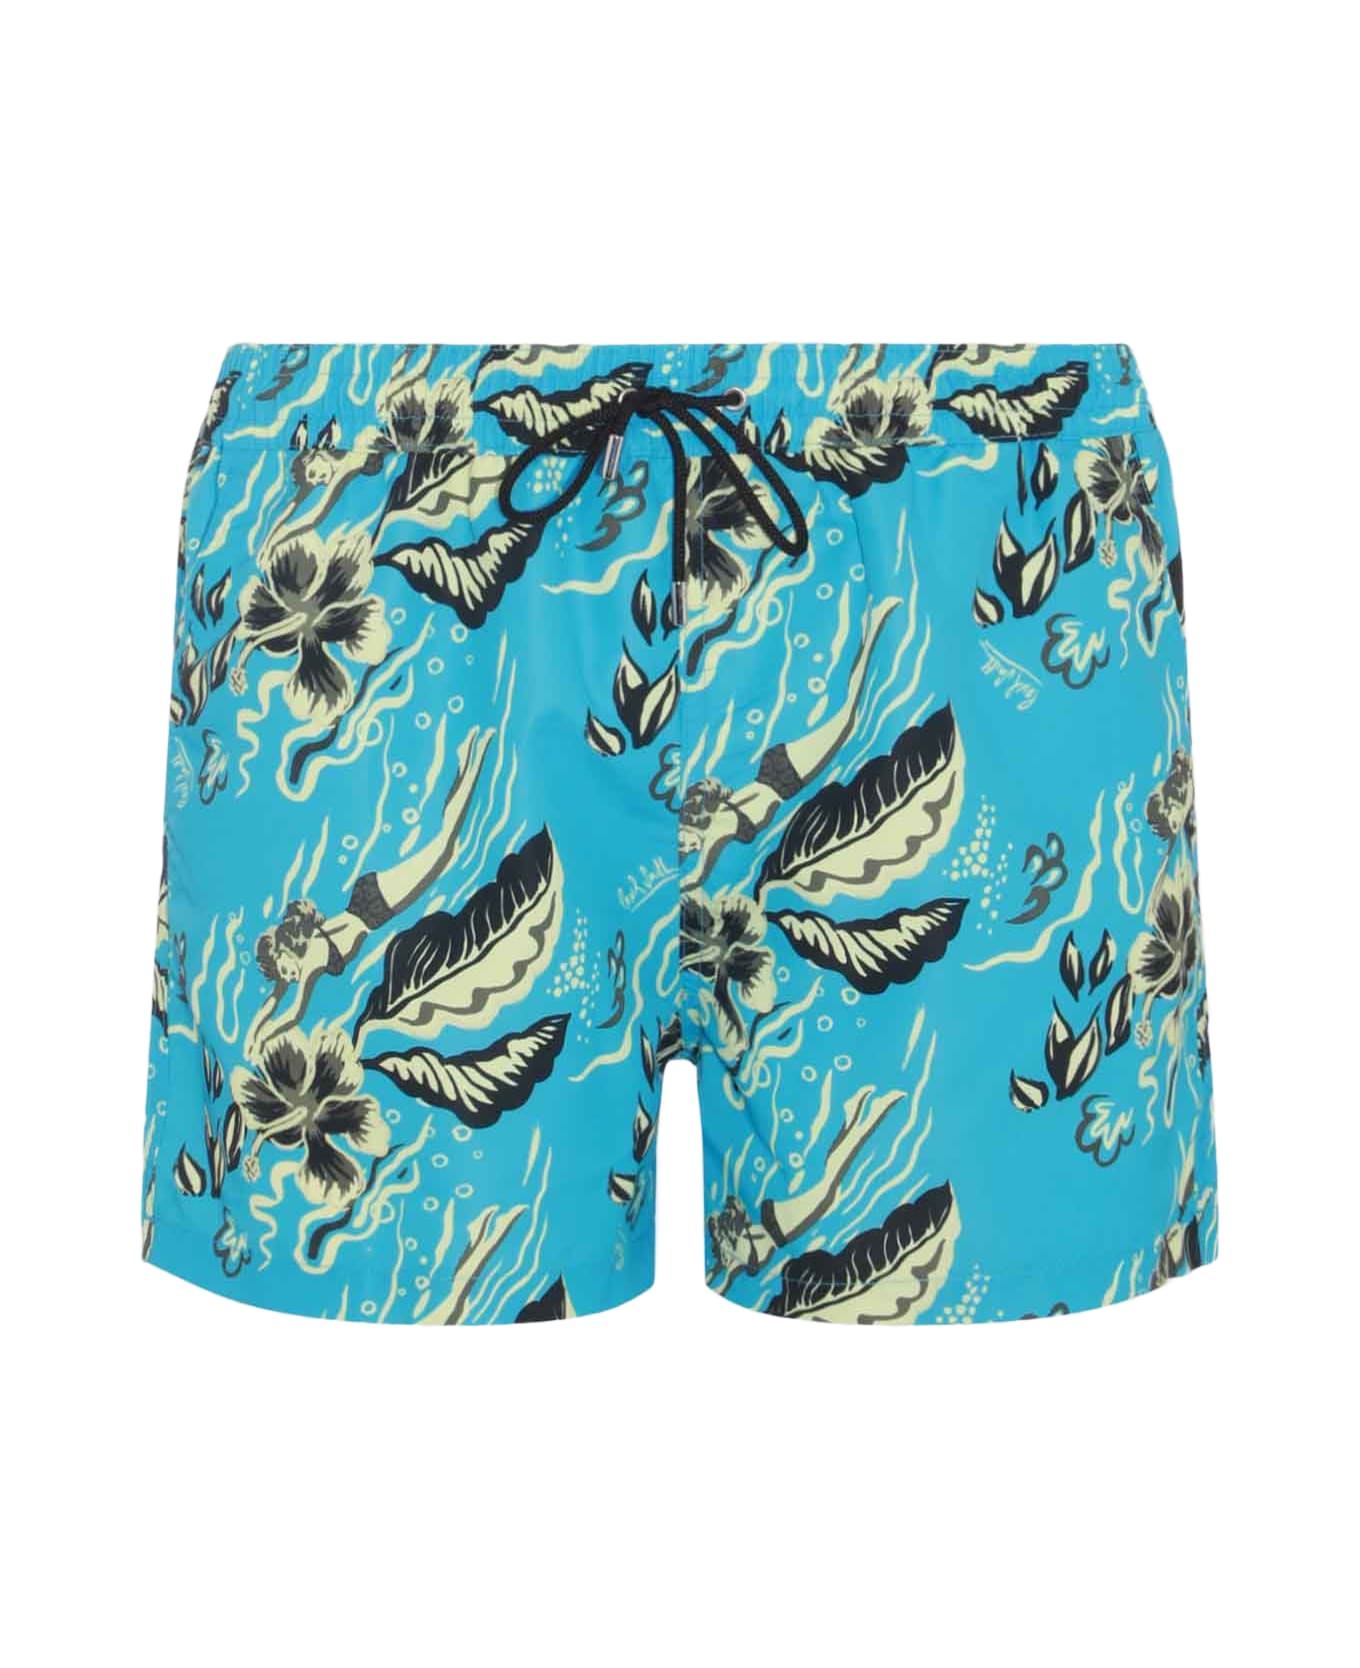 Paul Smith Light Blue Multicolour Swim Shorts - Blue